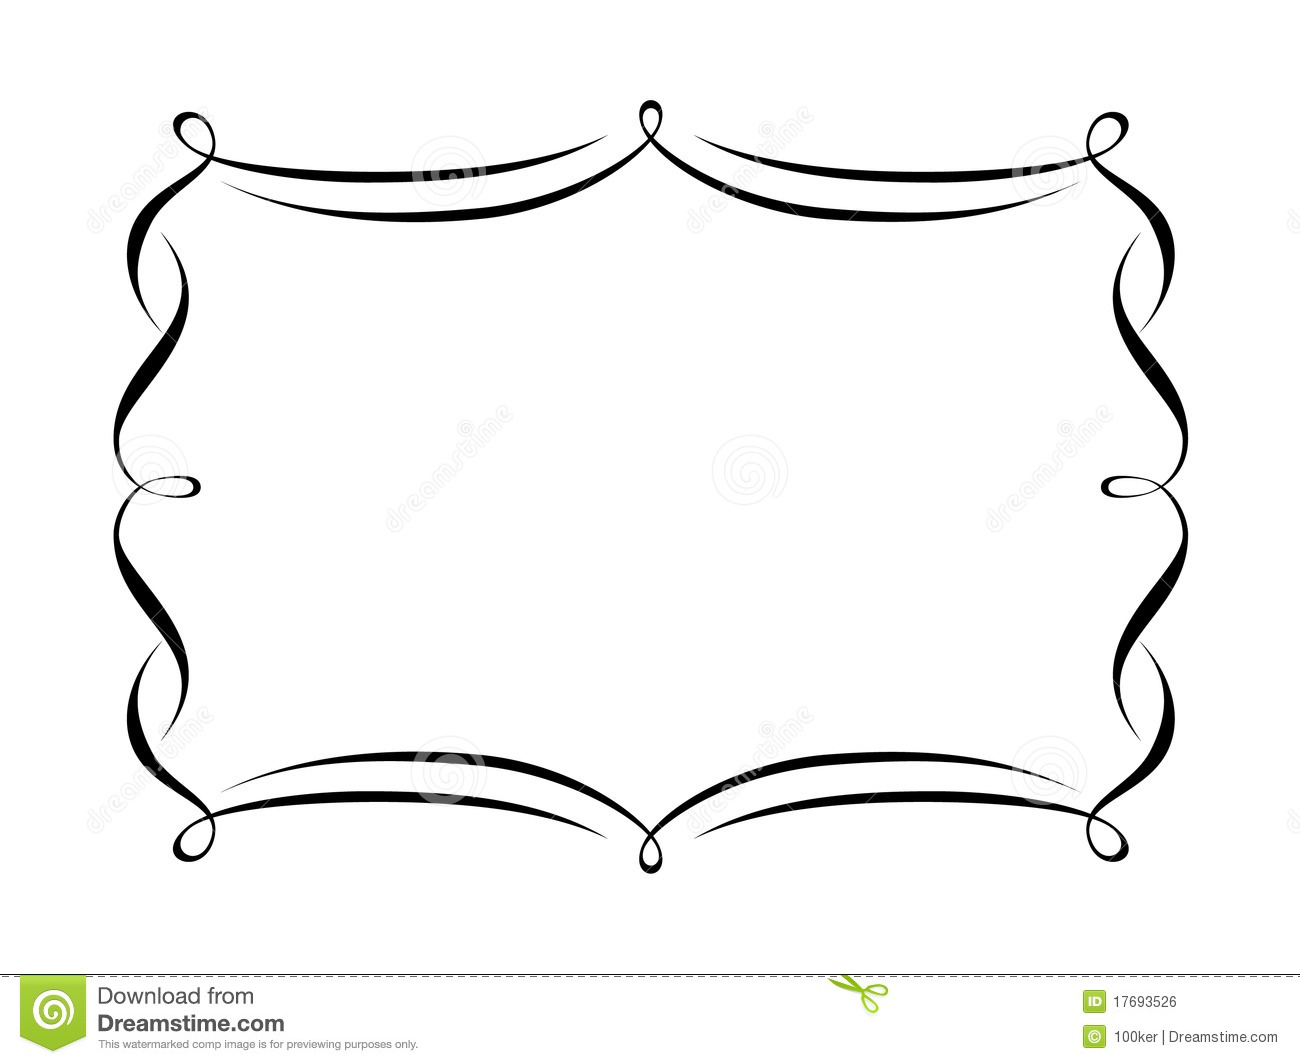 Penmanship Decorative Frame Royalty Free Stock Image   Image  17693526